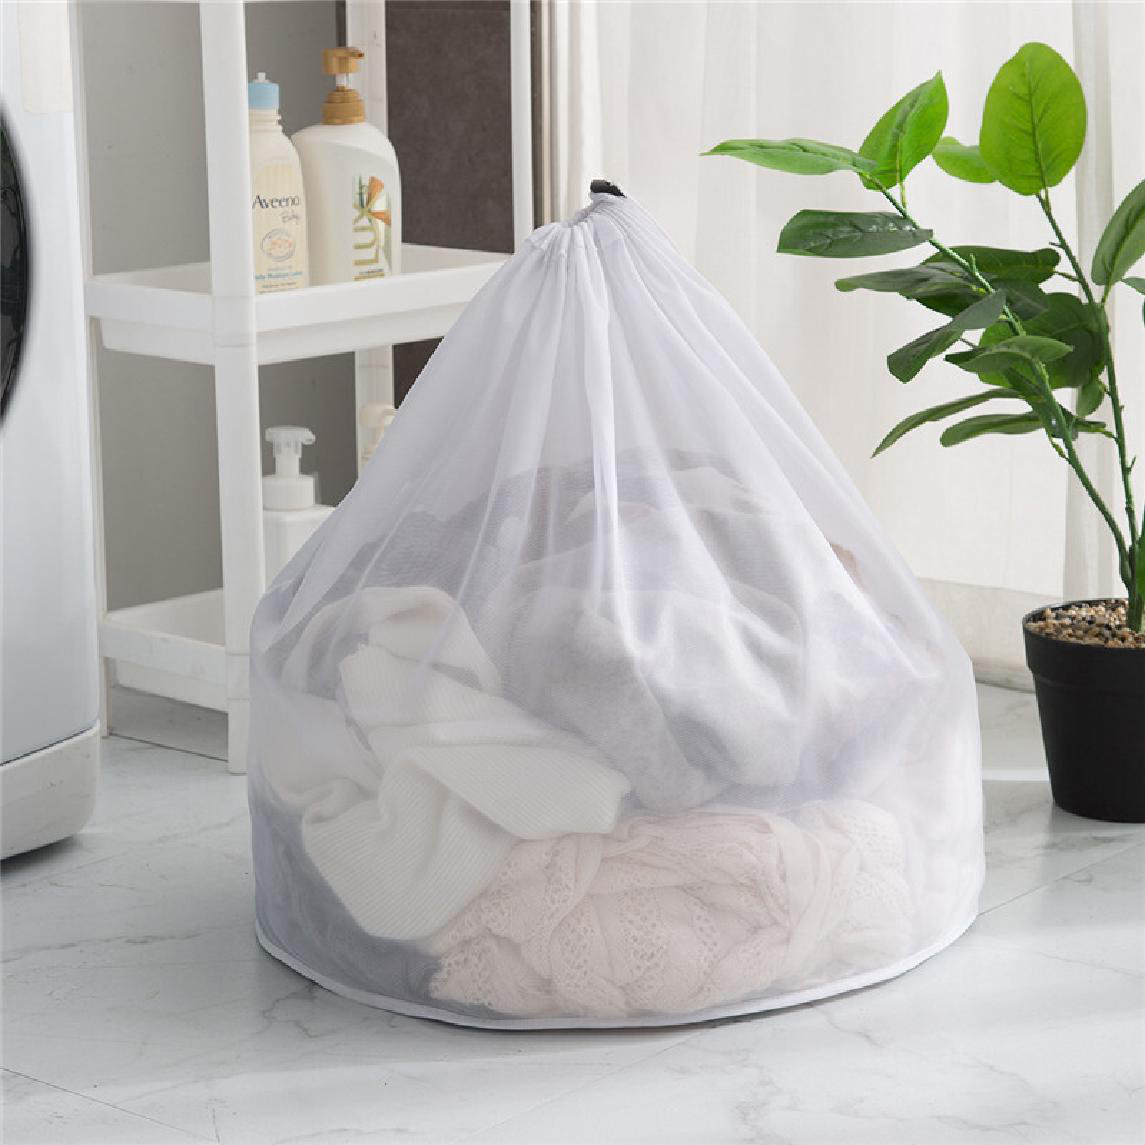 Rebrilliant Non-Defrmation Laundry Bag | Wayfair